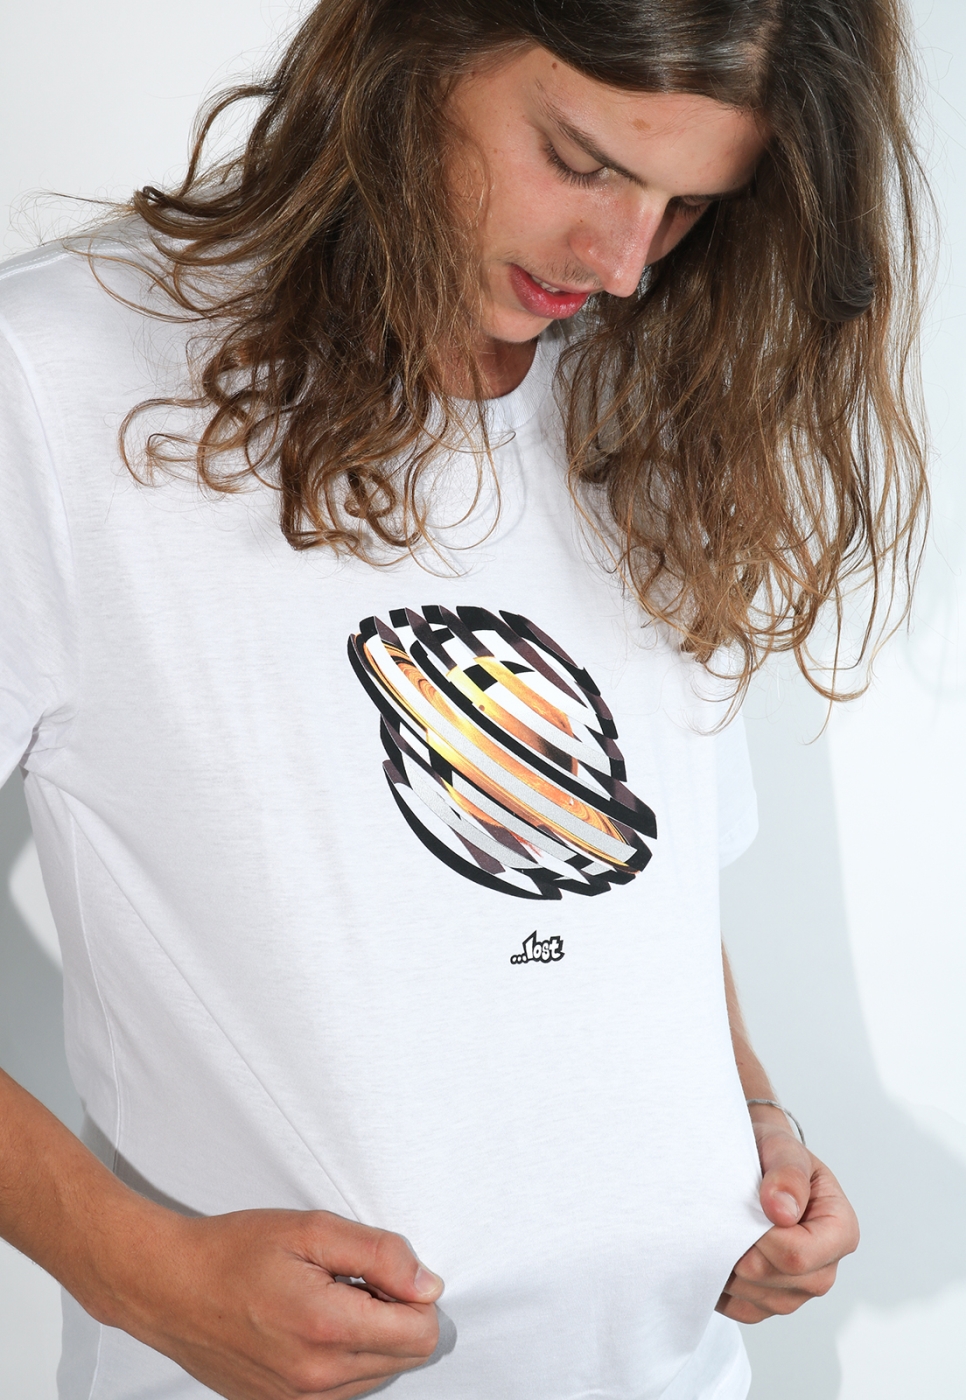 T-shirt Real Saturn Lost